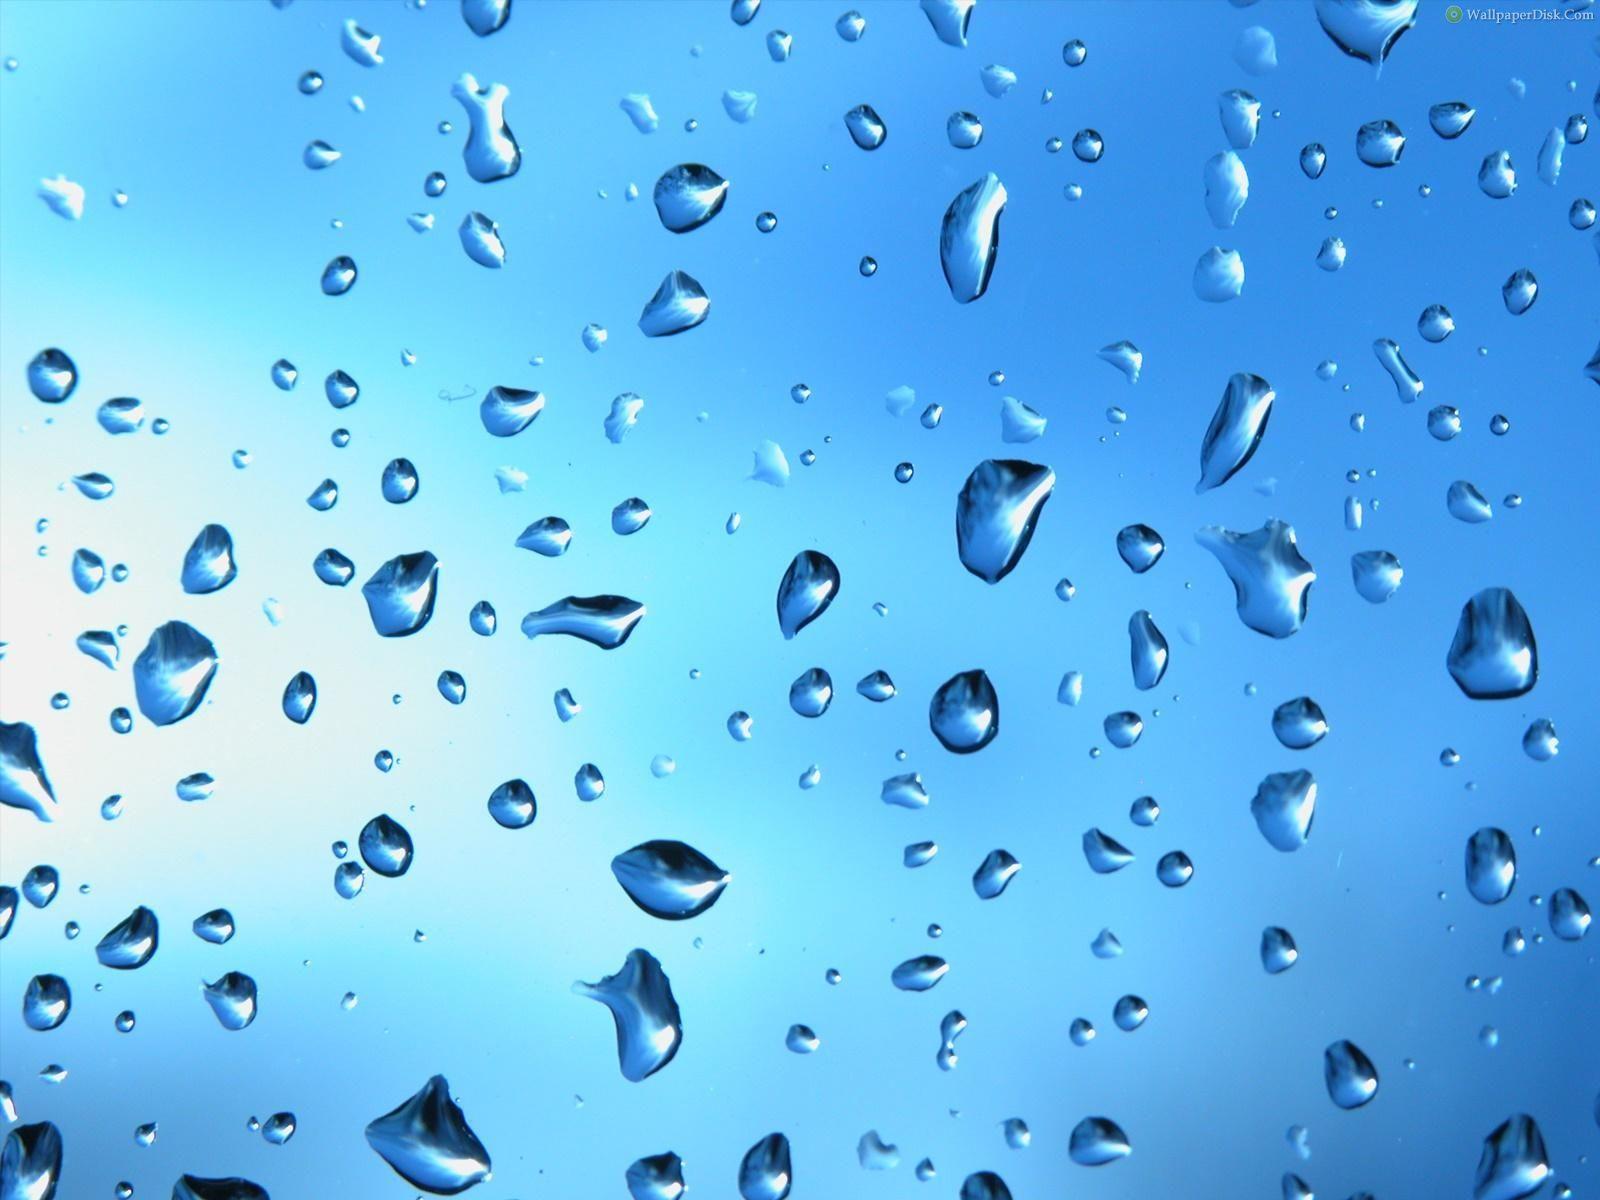 water droplets wallpaper hd